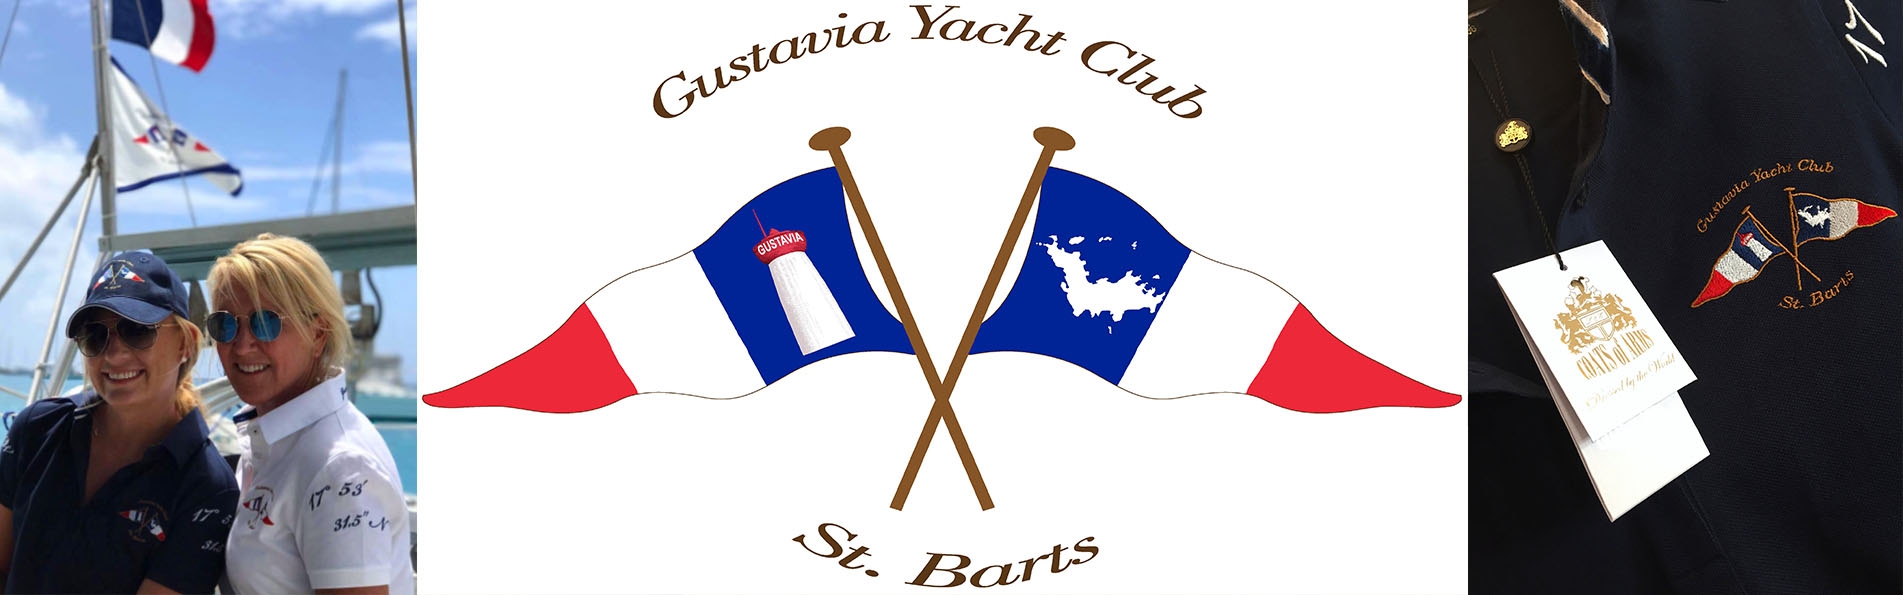 Slide-6-Gustavia-Yacht-Club